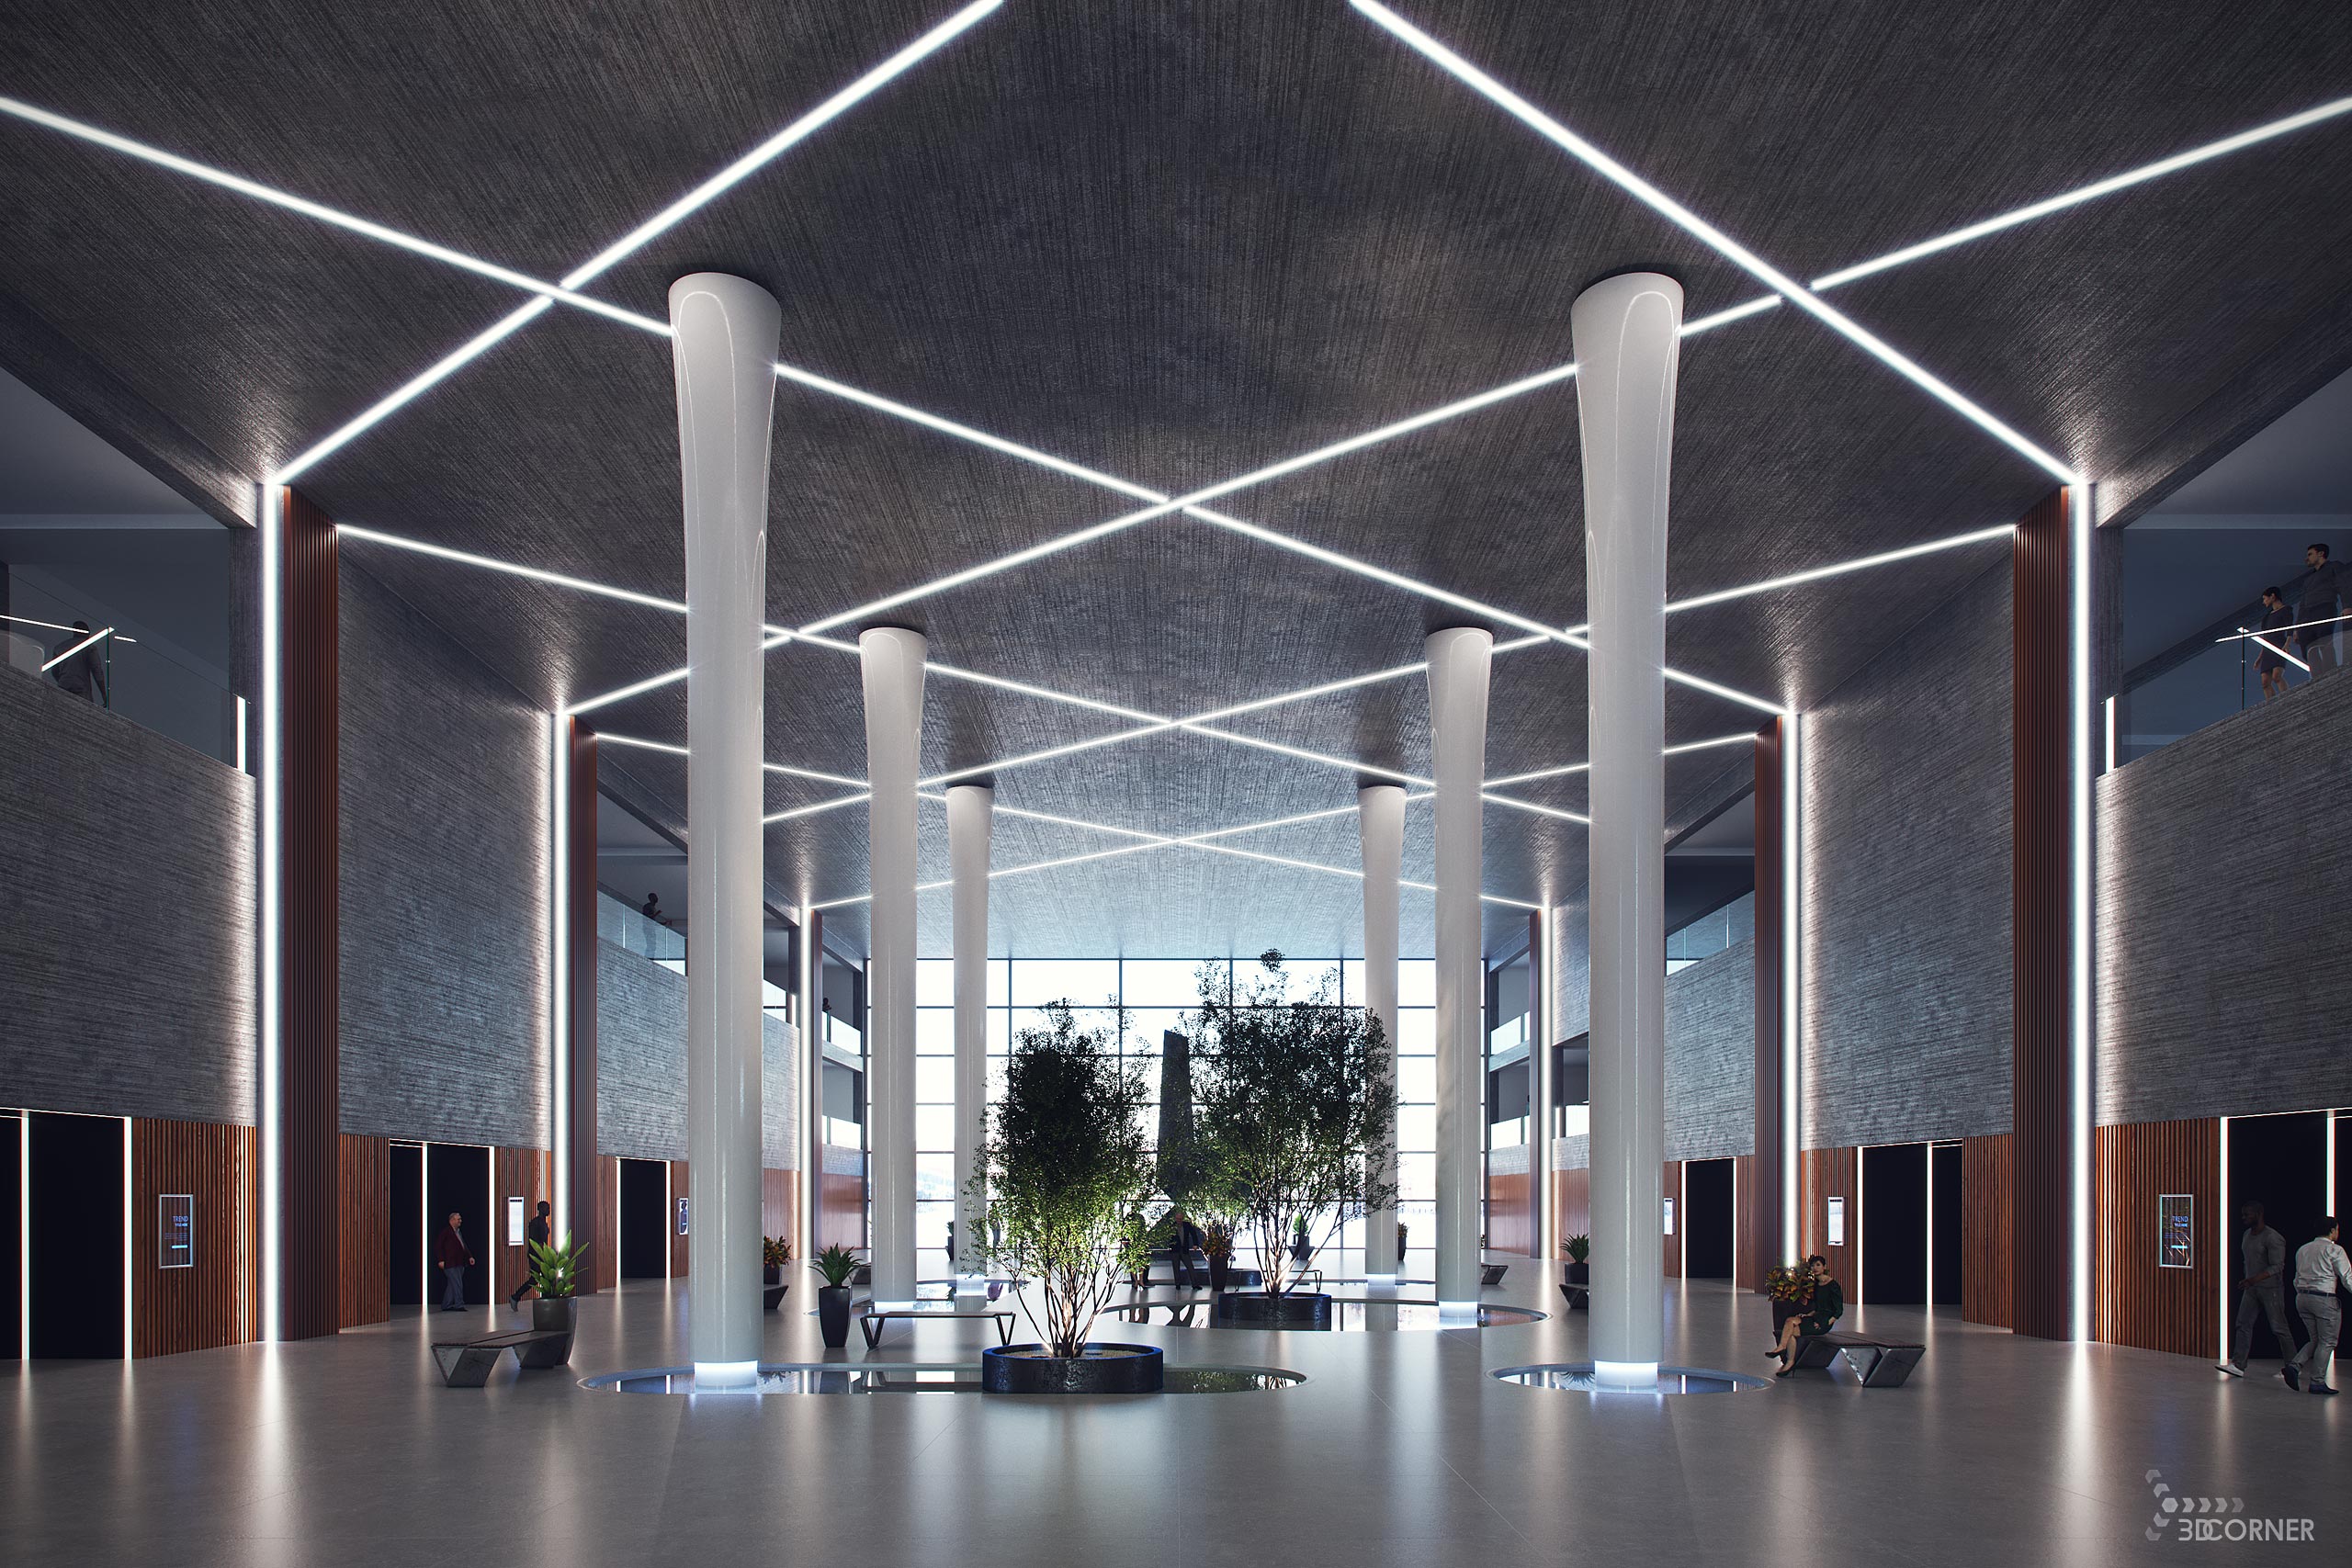 Photorealistic interior visualization of modern art museum hall